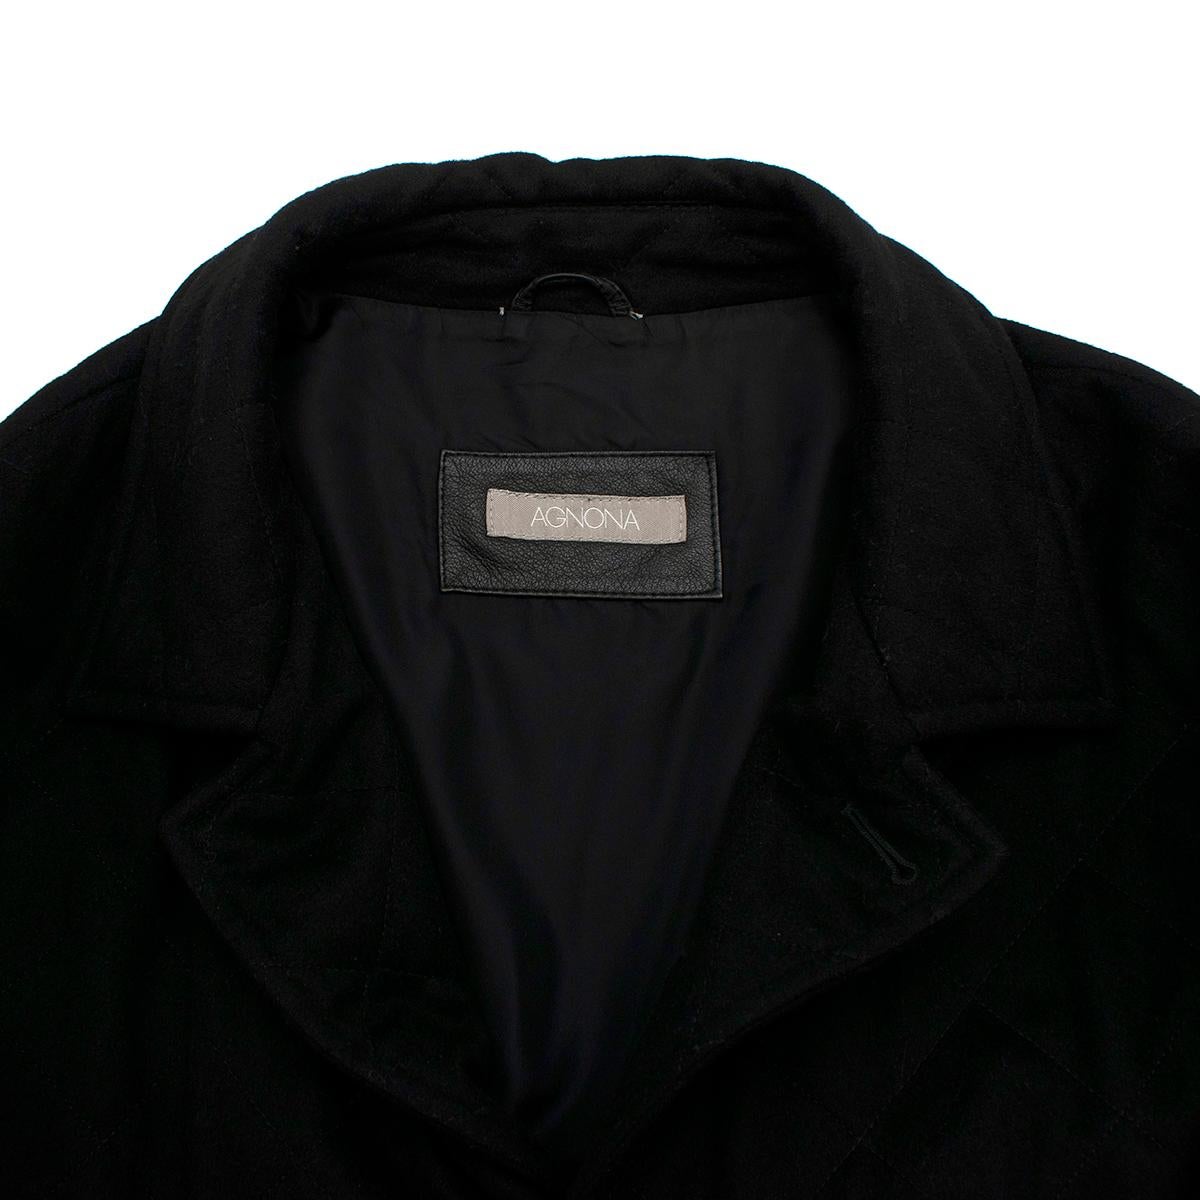 Agnona Black Cashmere Blend Coat - Size L In Excellent Condition For Sale In London, GB